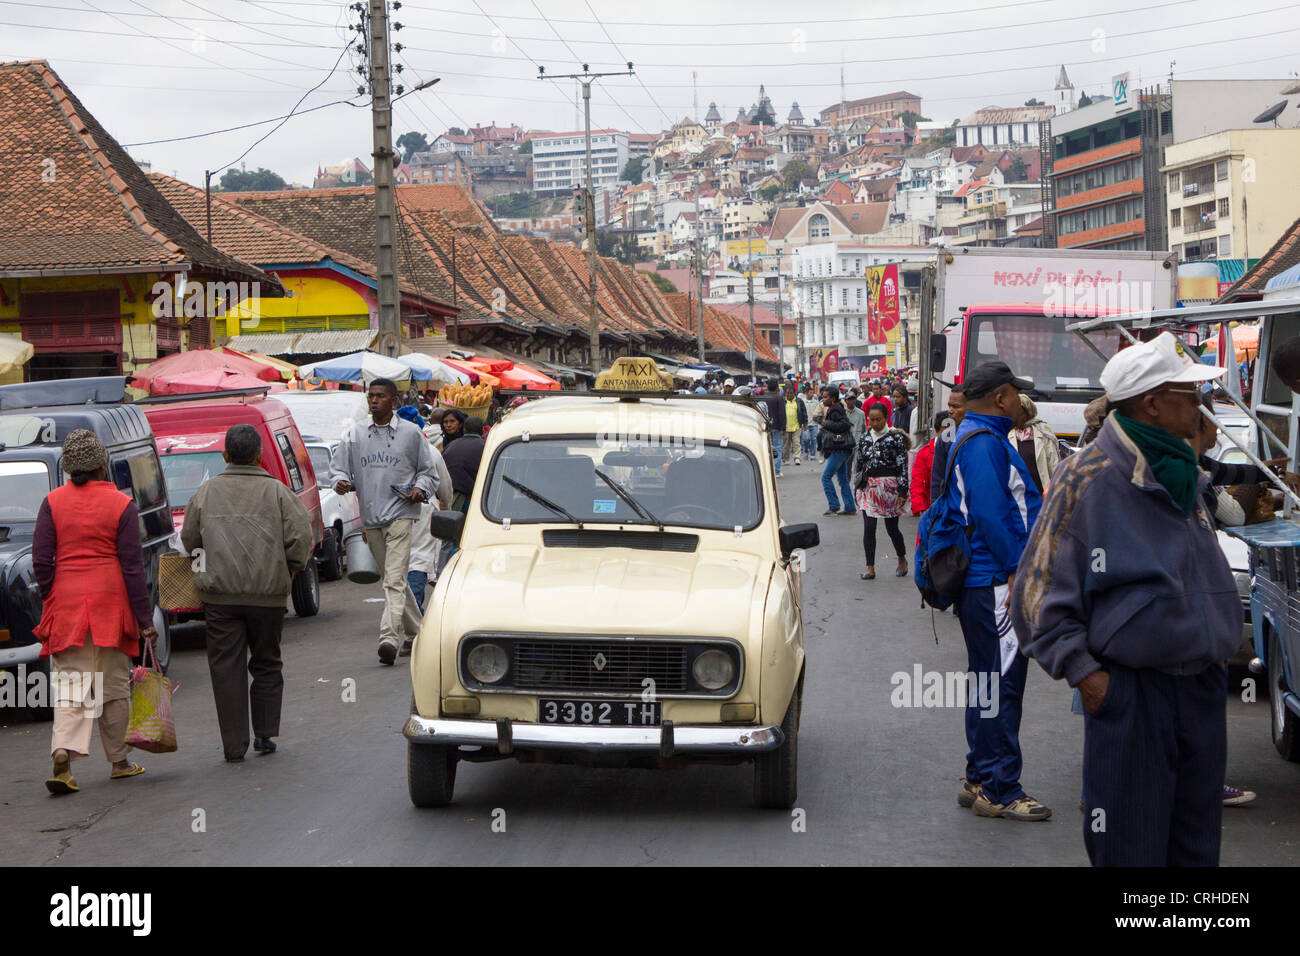 Renault 4 taxi car on street, Analakely market, Antananarivo, Madagascar Stock Photo